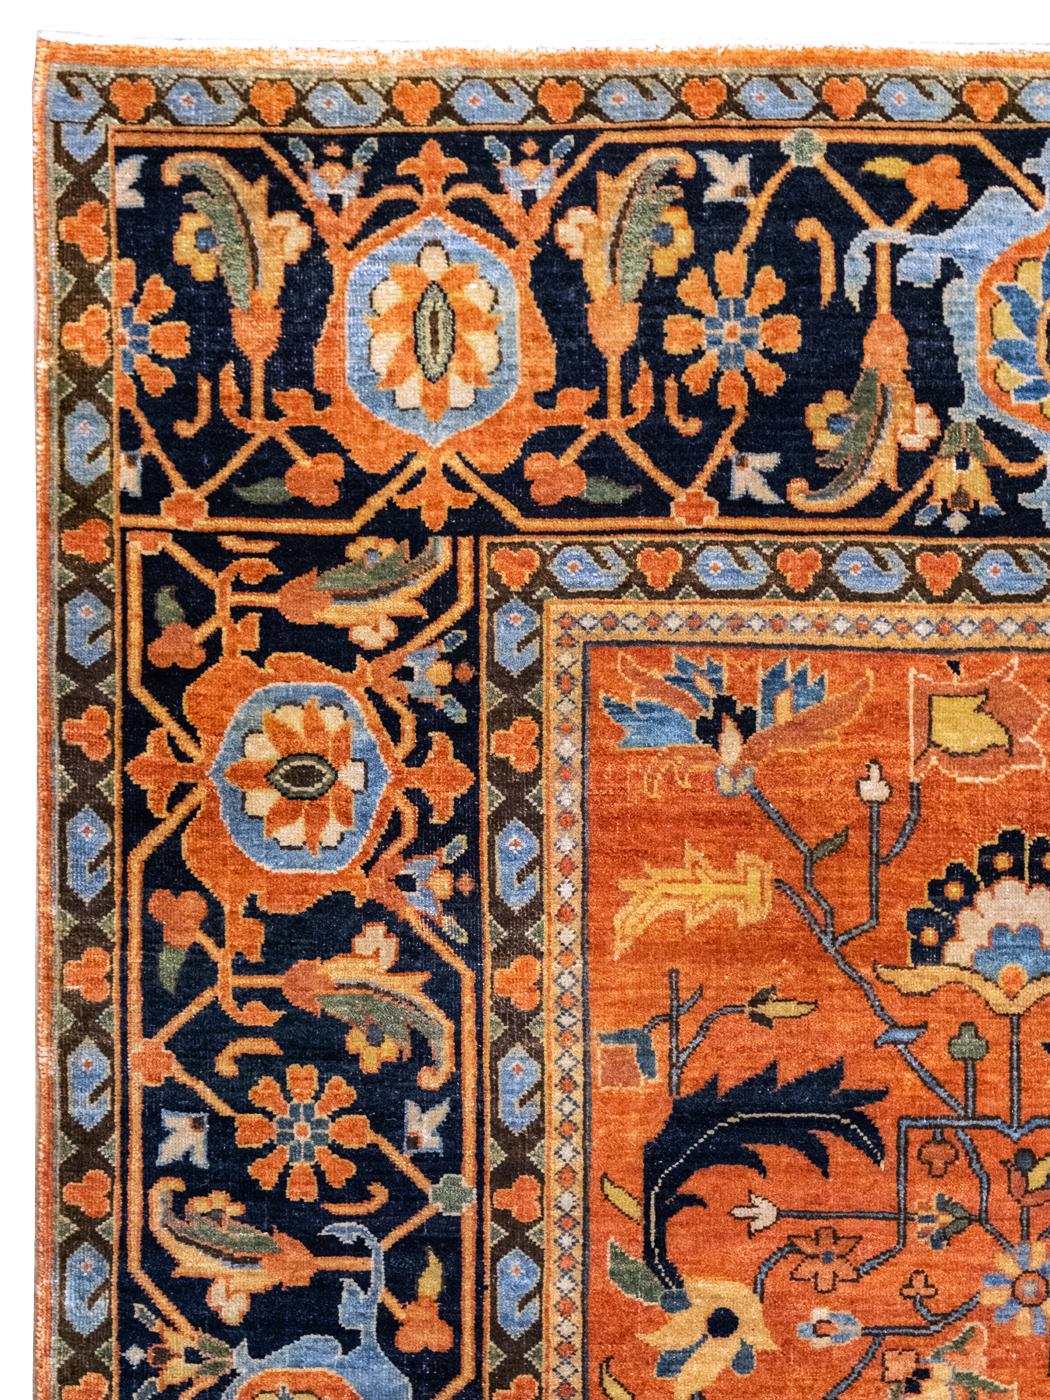 Vegetable Dyed Classic Persian Serapi Carpet in Orange, Indigo, and Blue